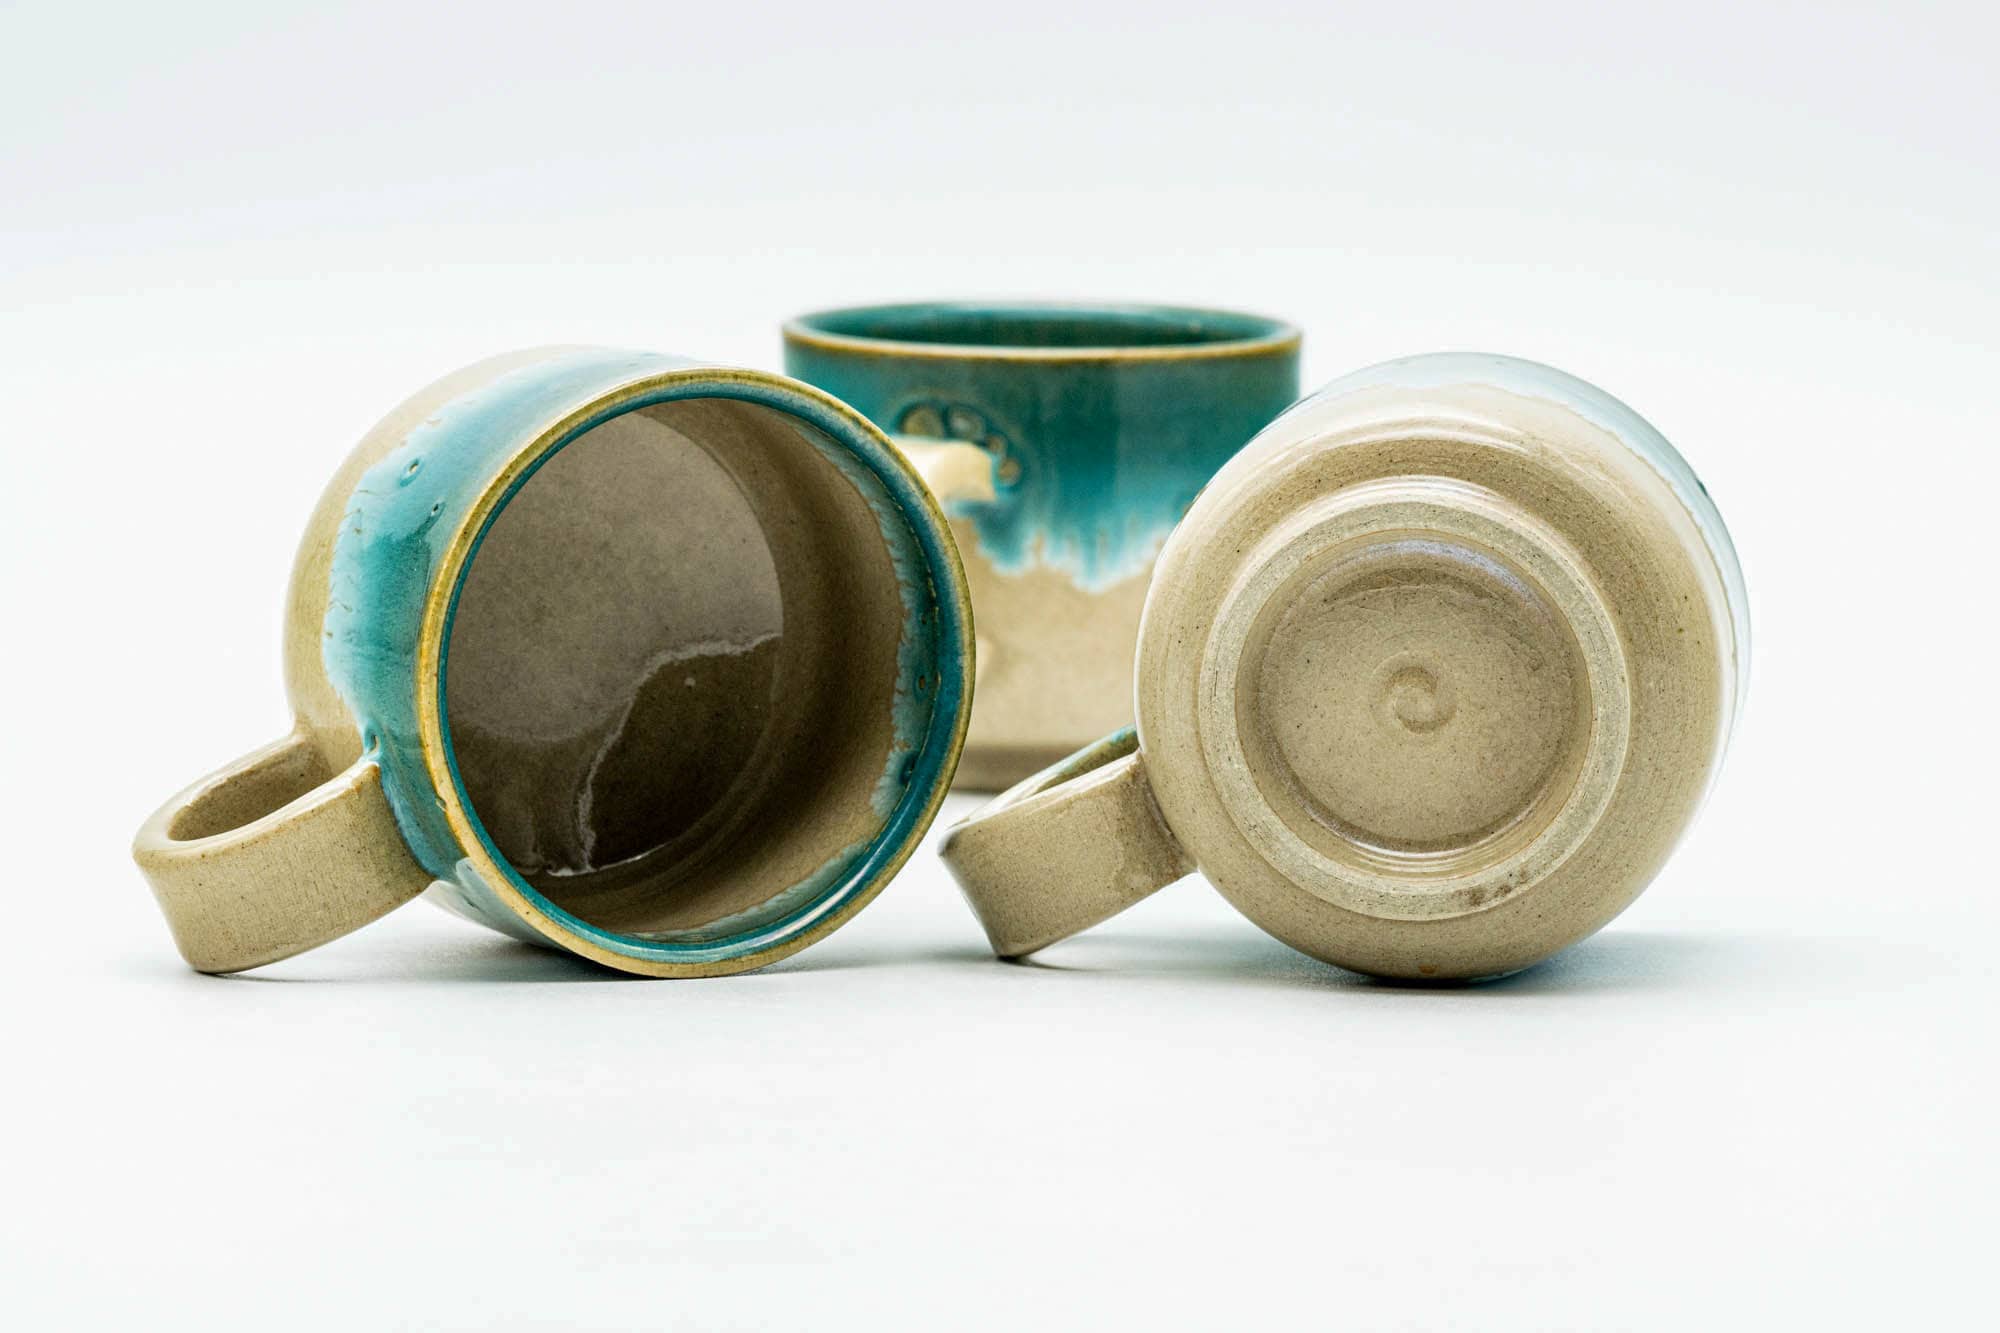 Japanese Teacups - Set of 3 Turquoise Drip-Glazed Agano-yaki Yunomi - 120ml